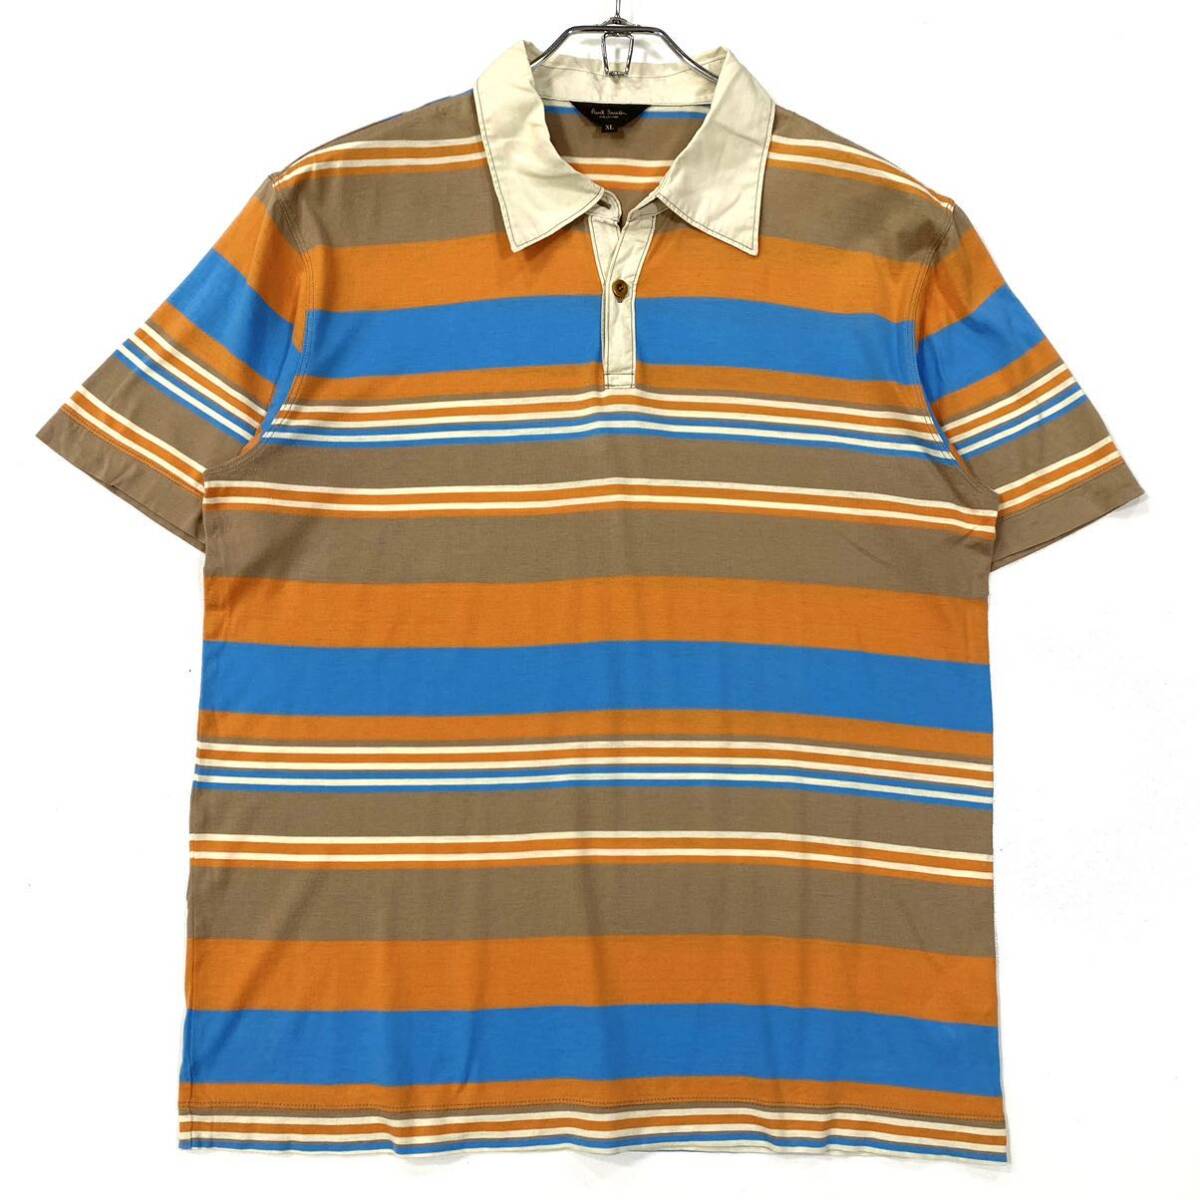 Paul Smith(ポールスミス)半袖ポロシャツ マルチボーダー メンズXL ブラウン系/オレンジ系/ブルー系の画像1